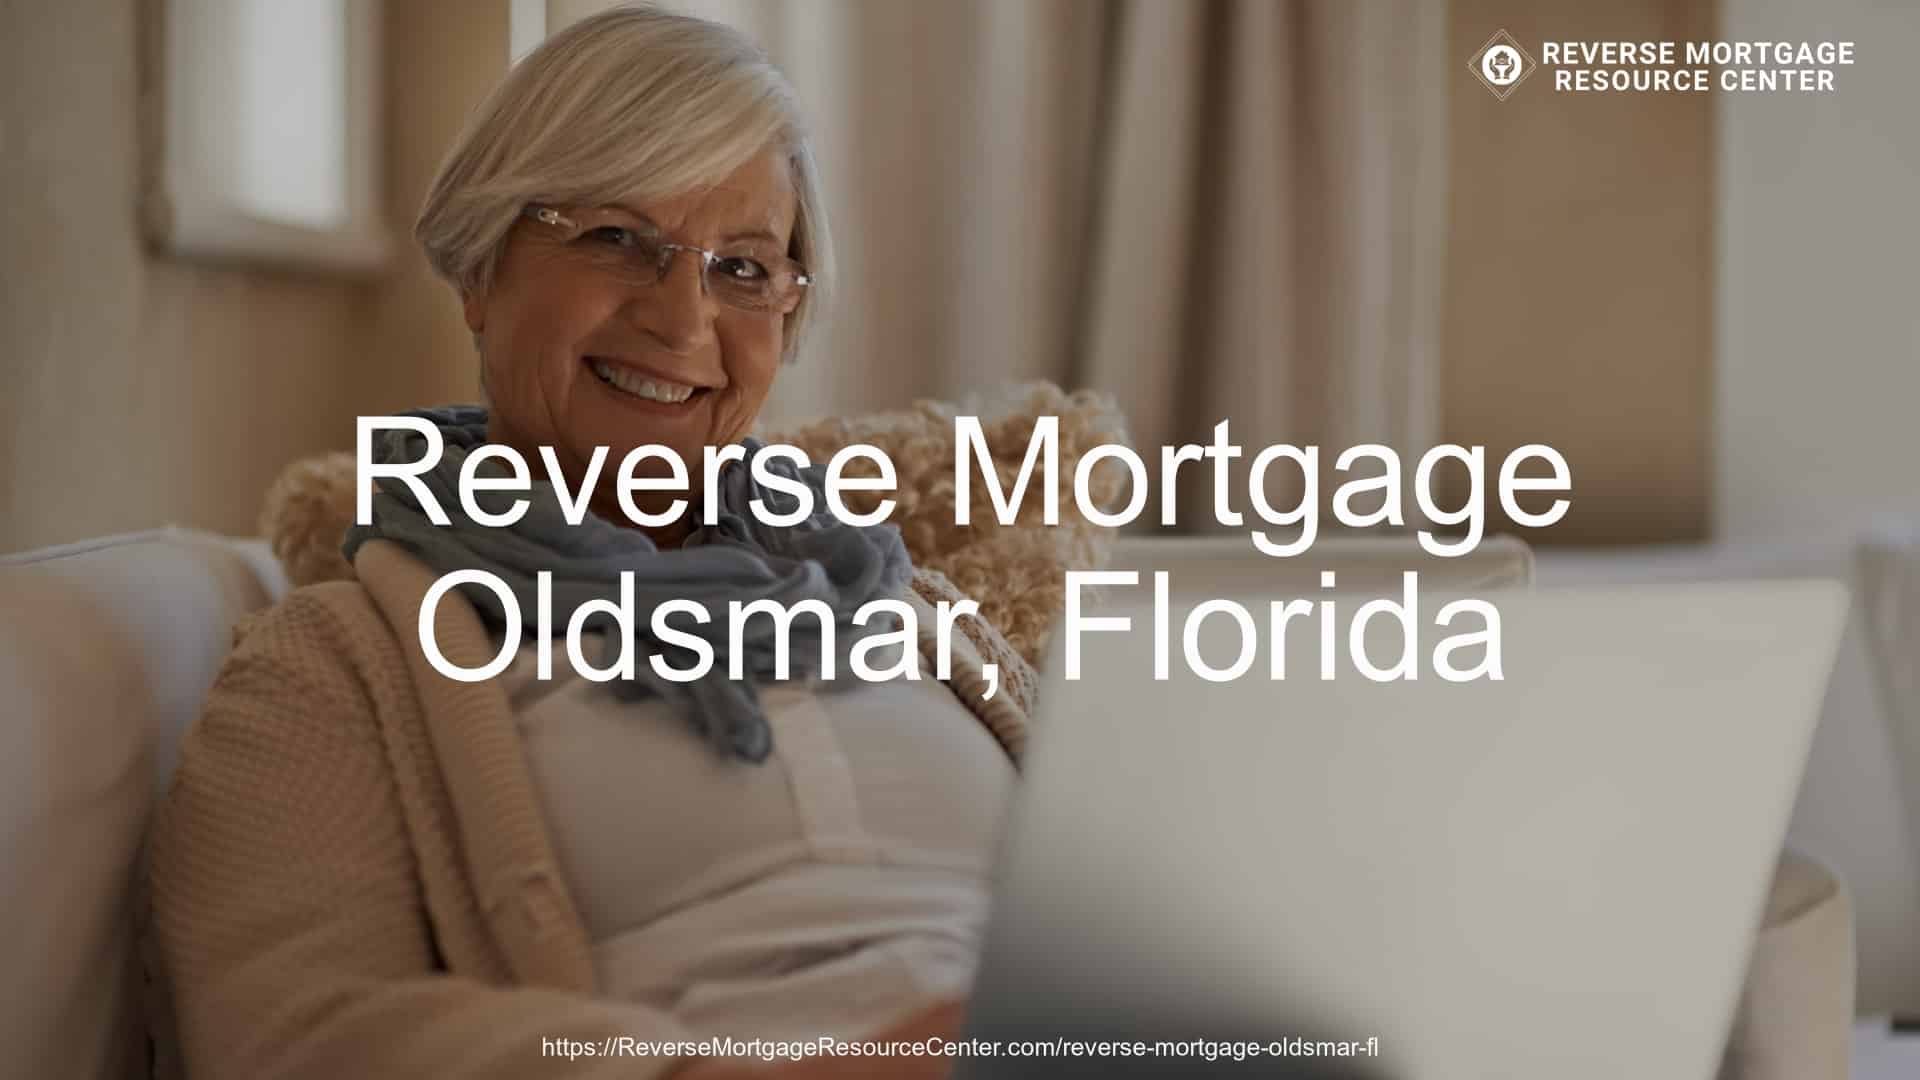 Reverse Mortgage Loans in Oldsmar Florida